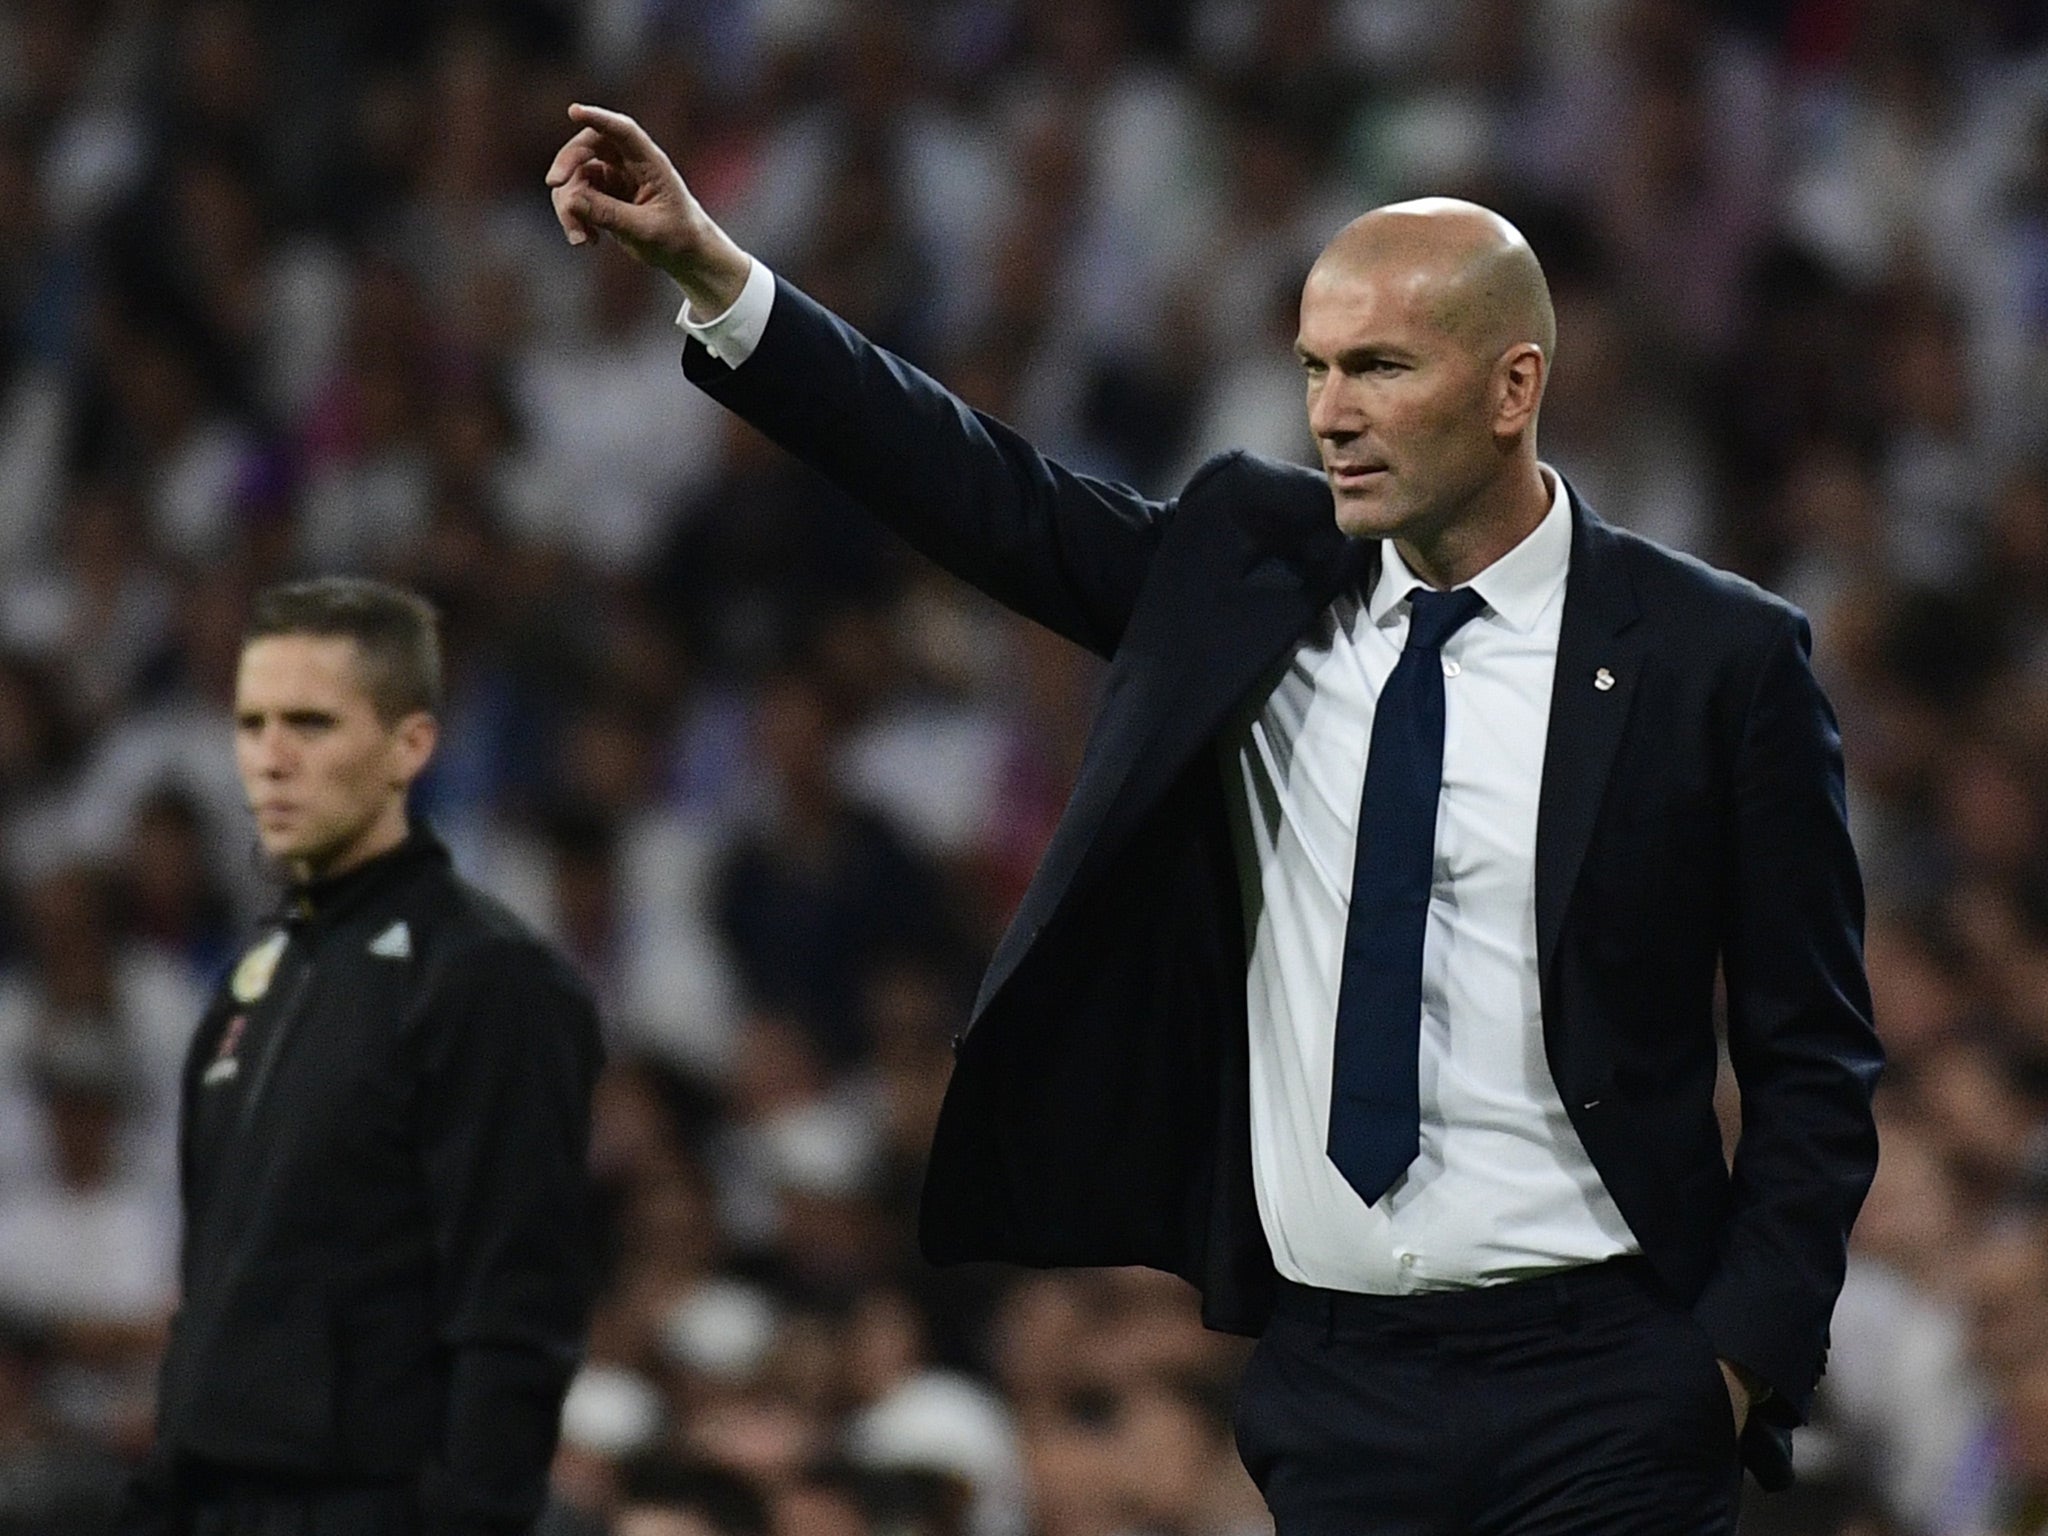 Zidane said his men could handle the pressure